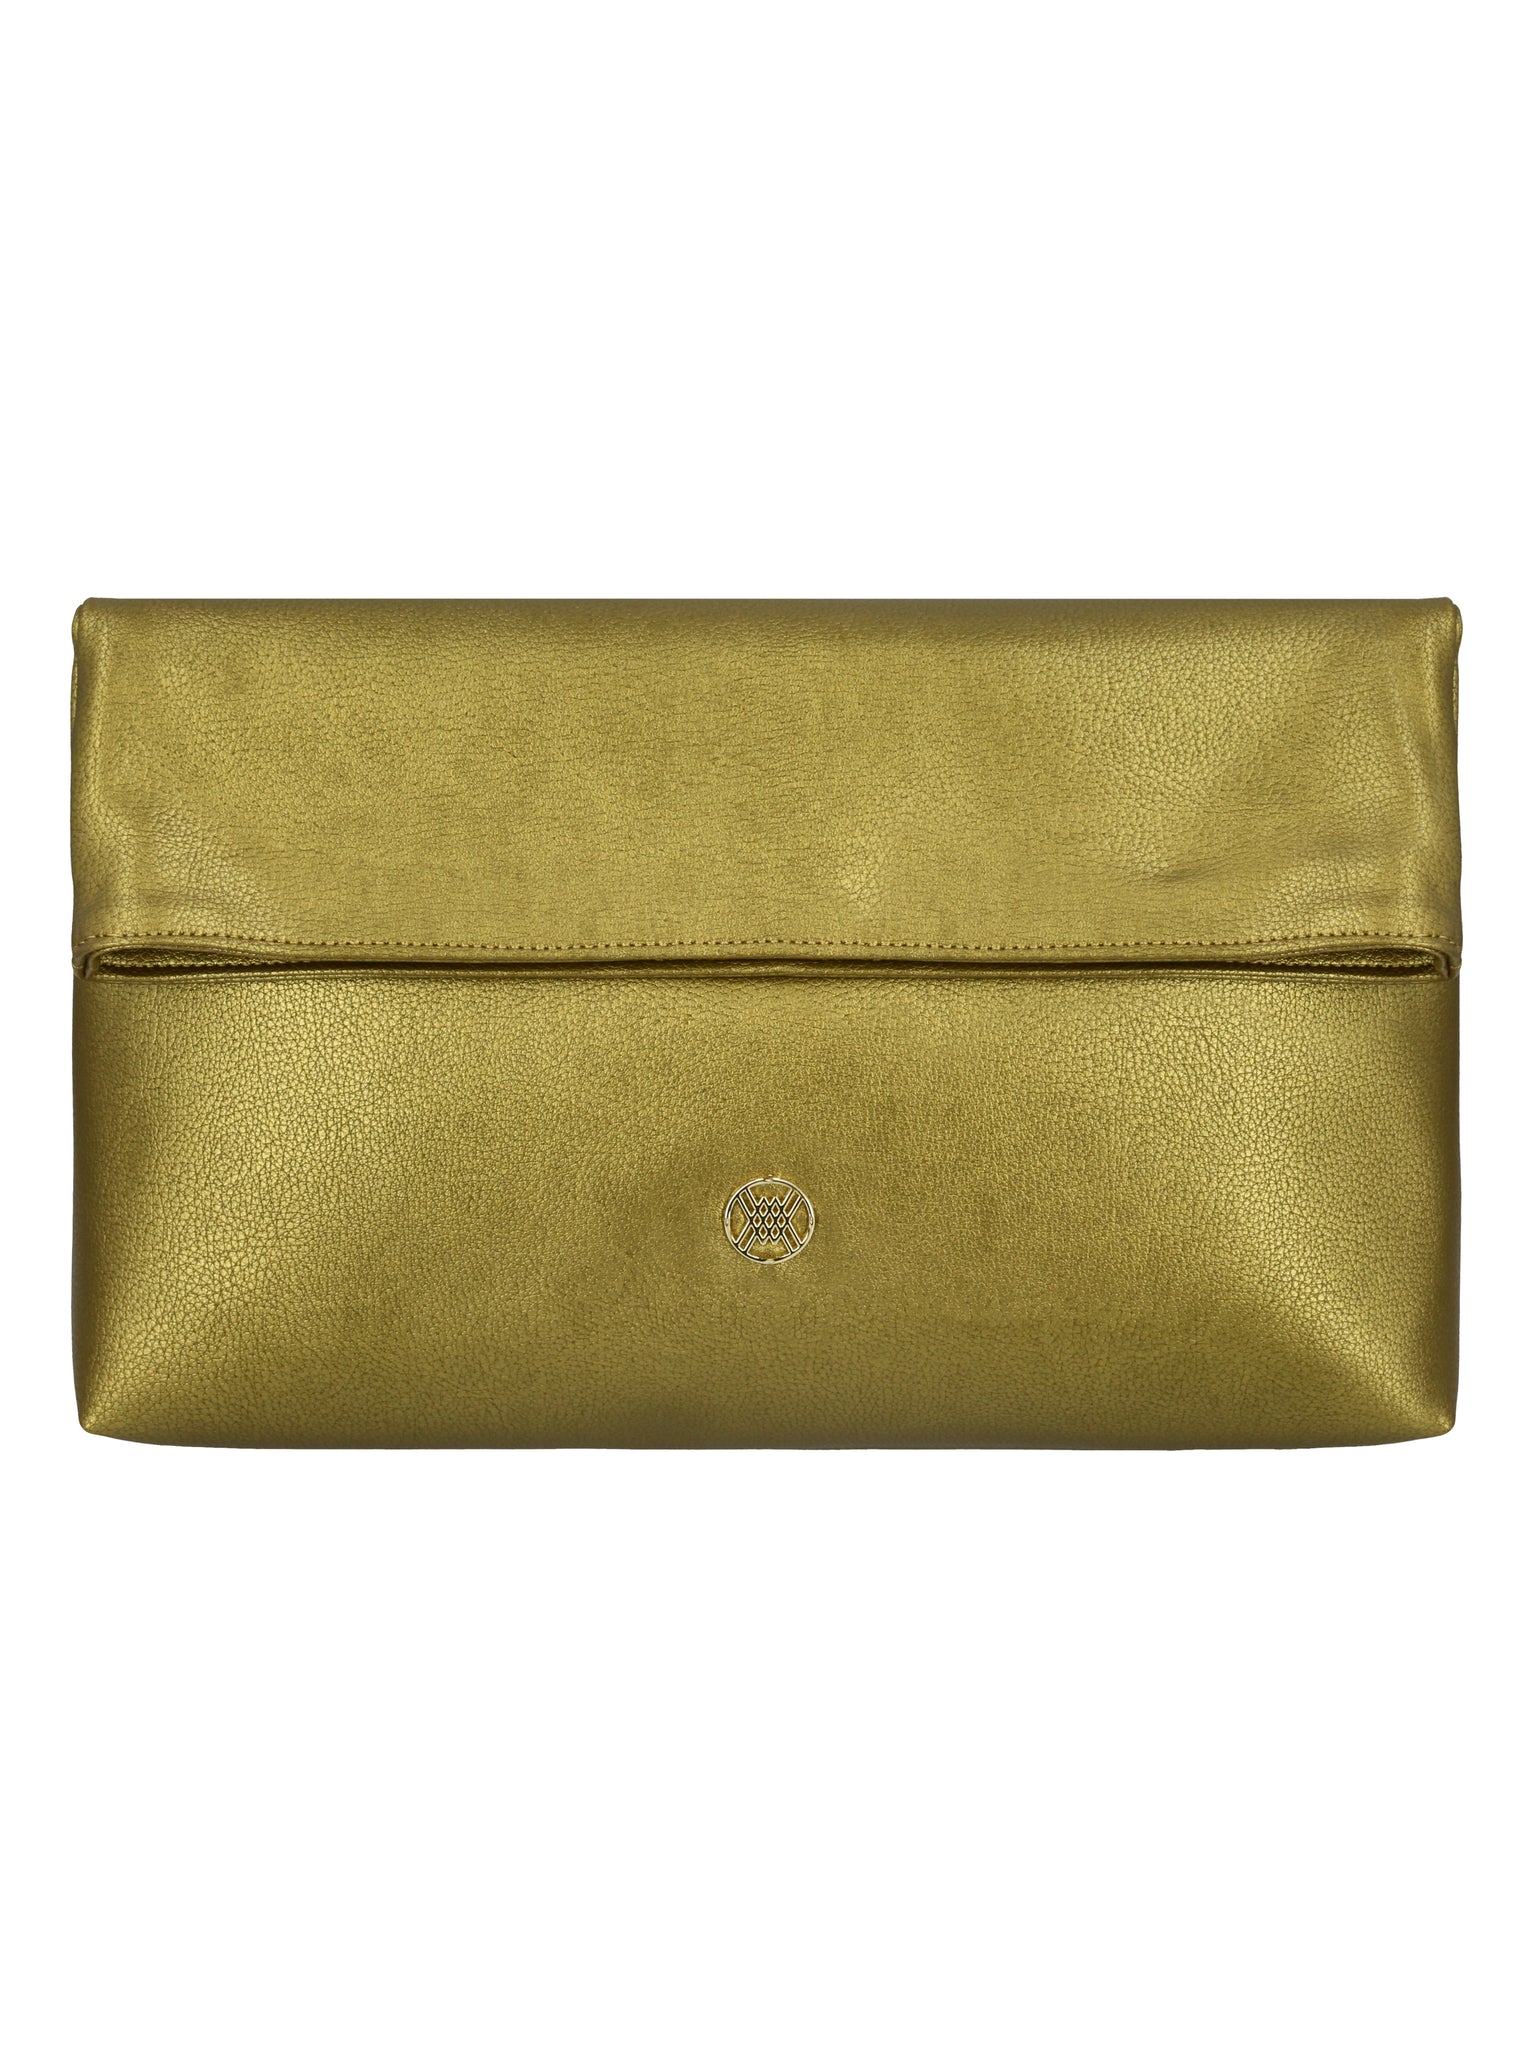 DARIO vegan leather clutch bag - Metallic gold